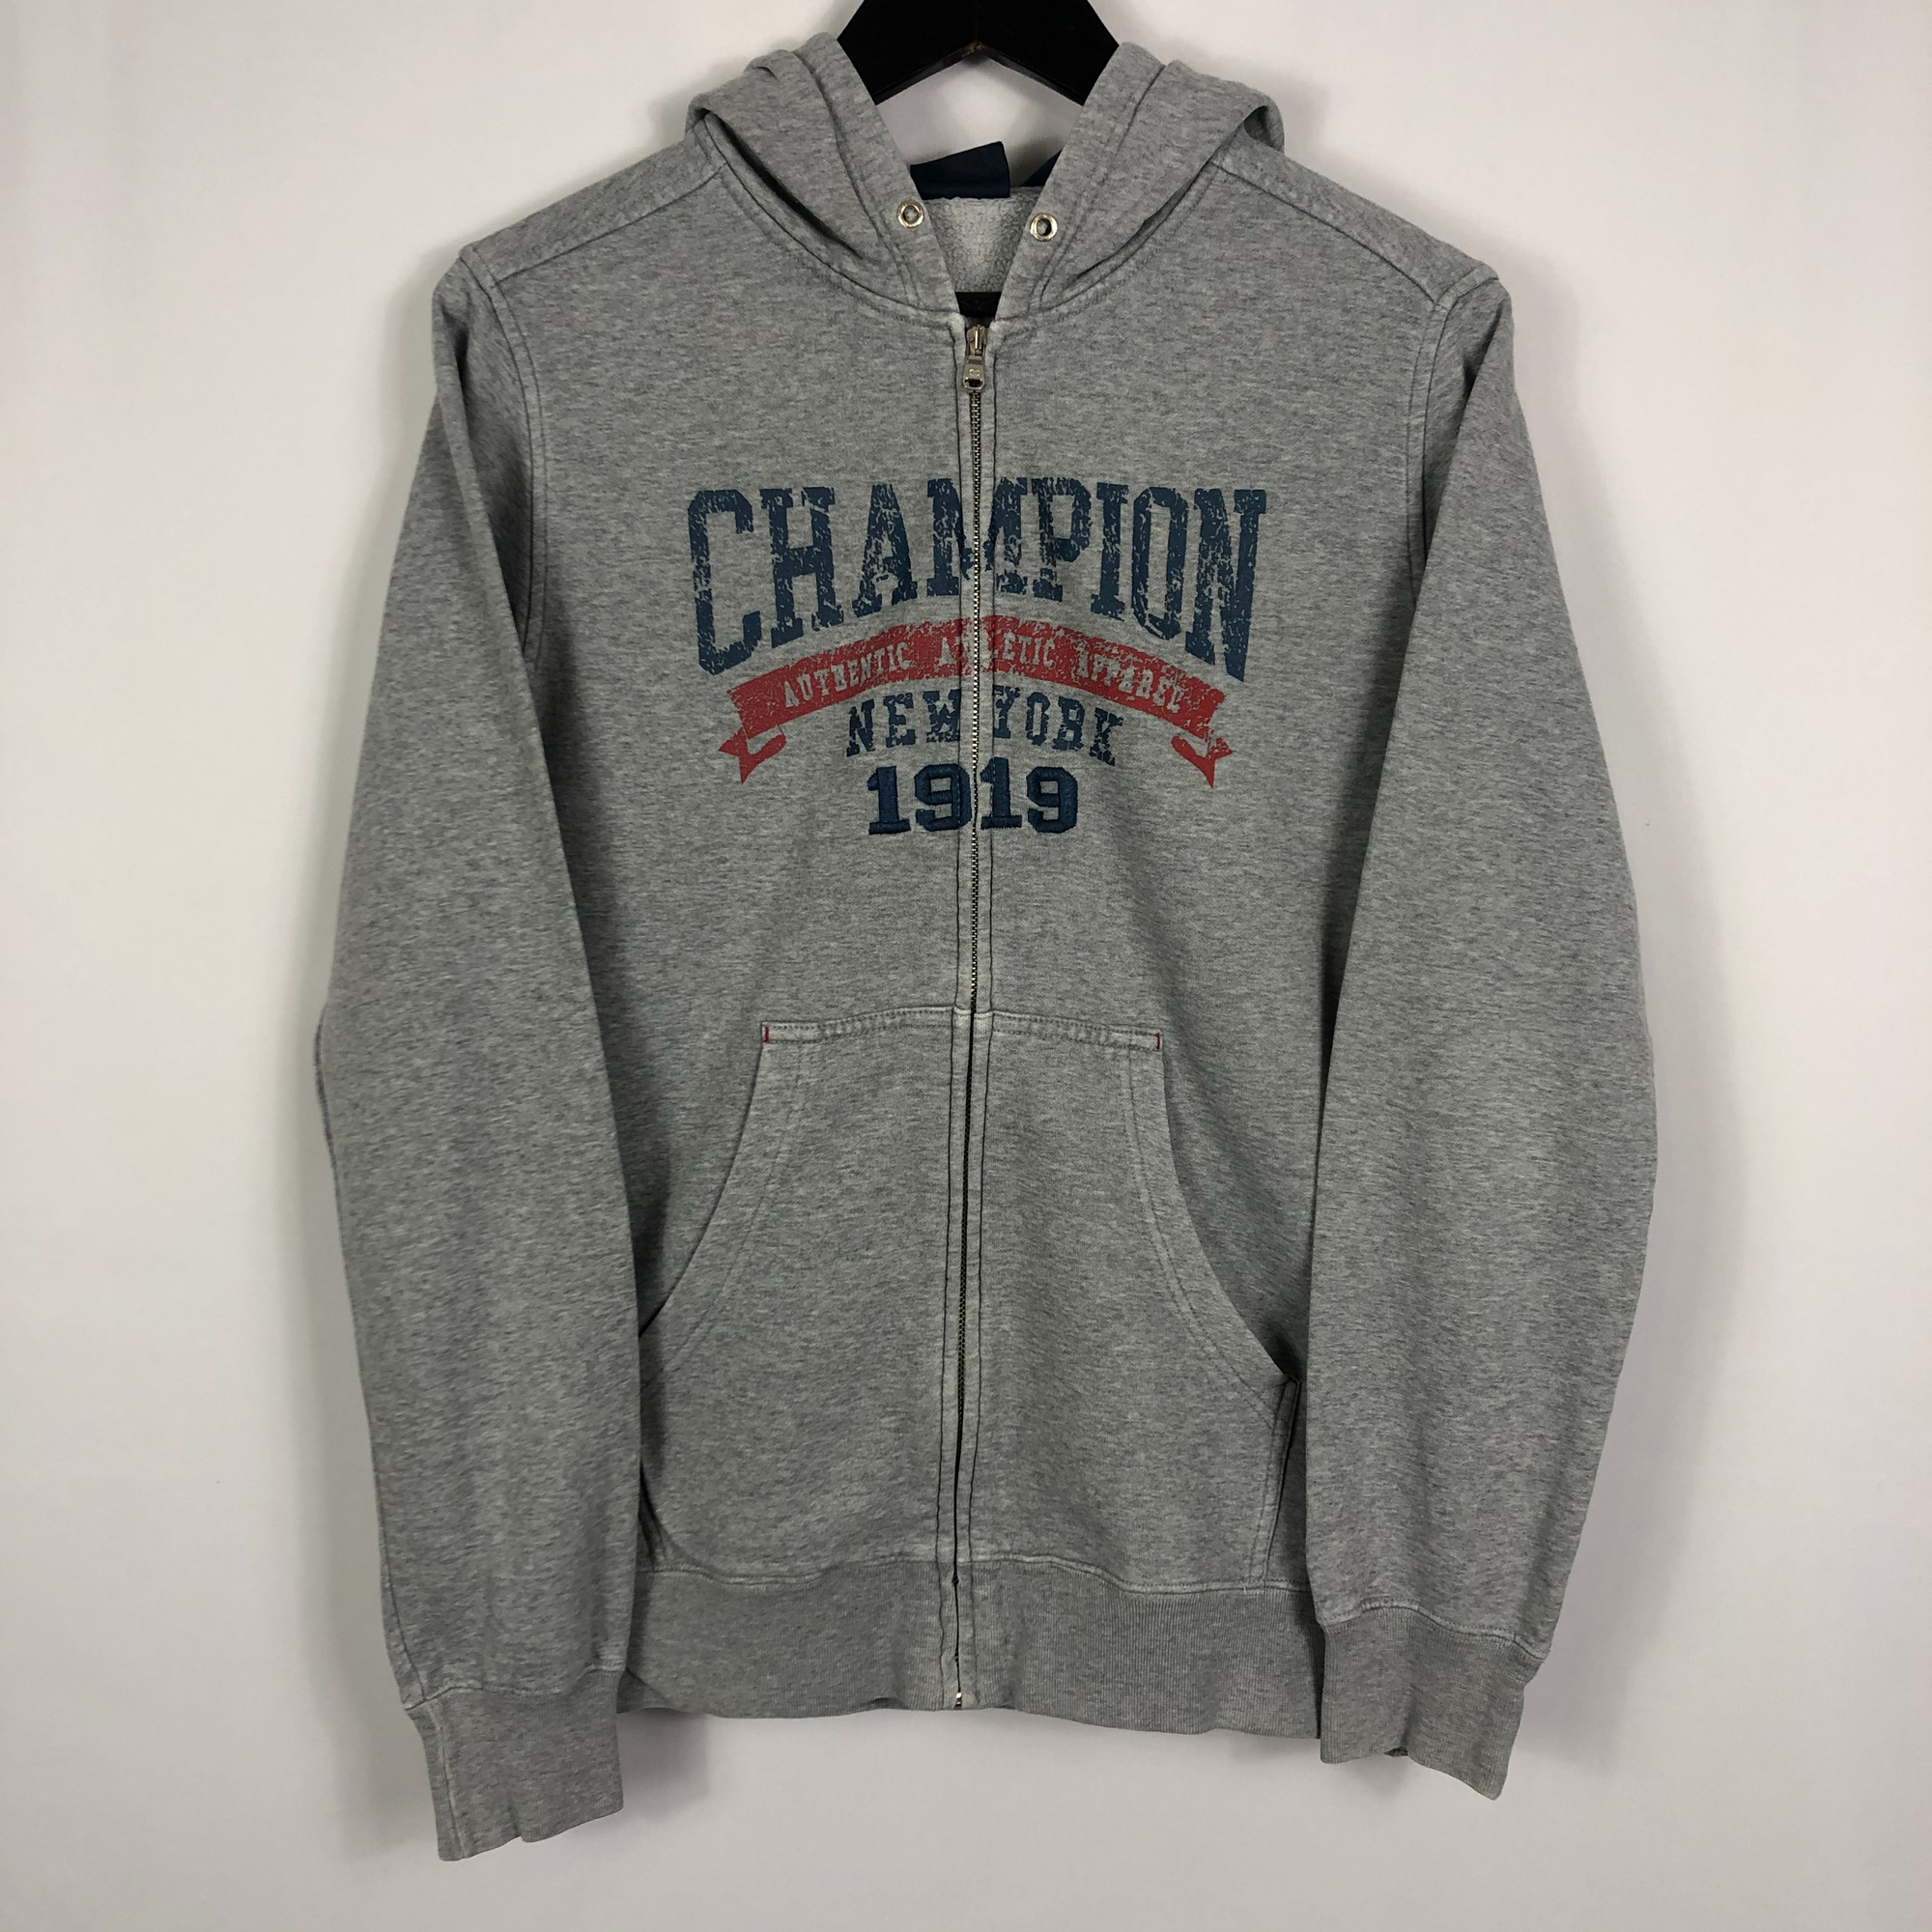 Vintage Champion Spellout Sweatshirt Hoodie in Grey - Men's Small/Women's Large